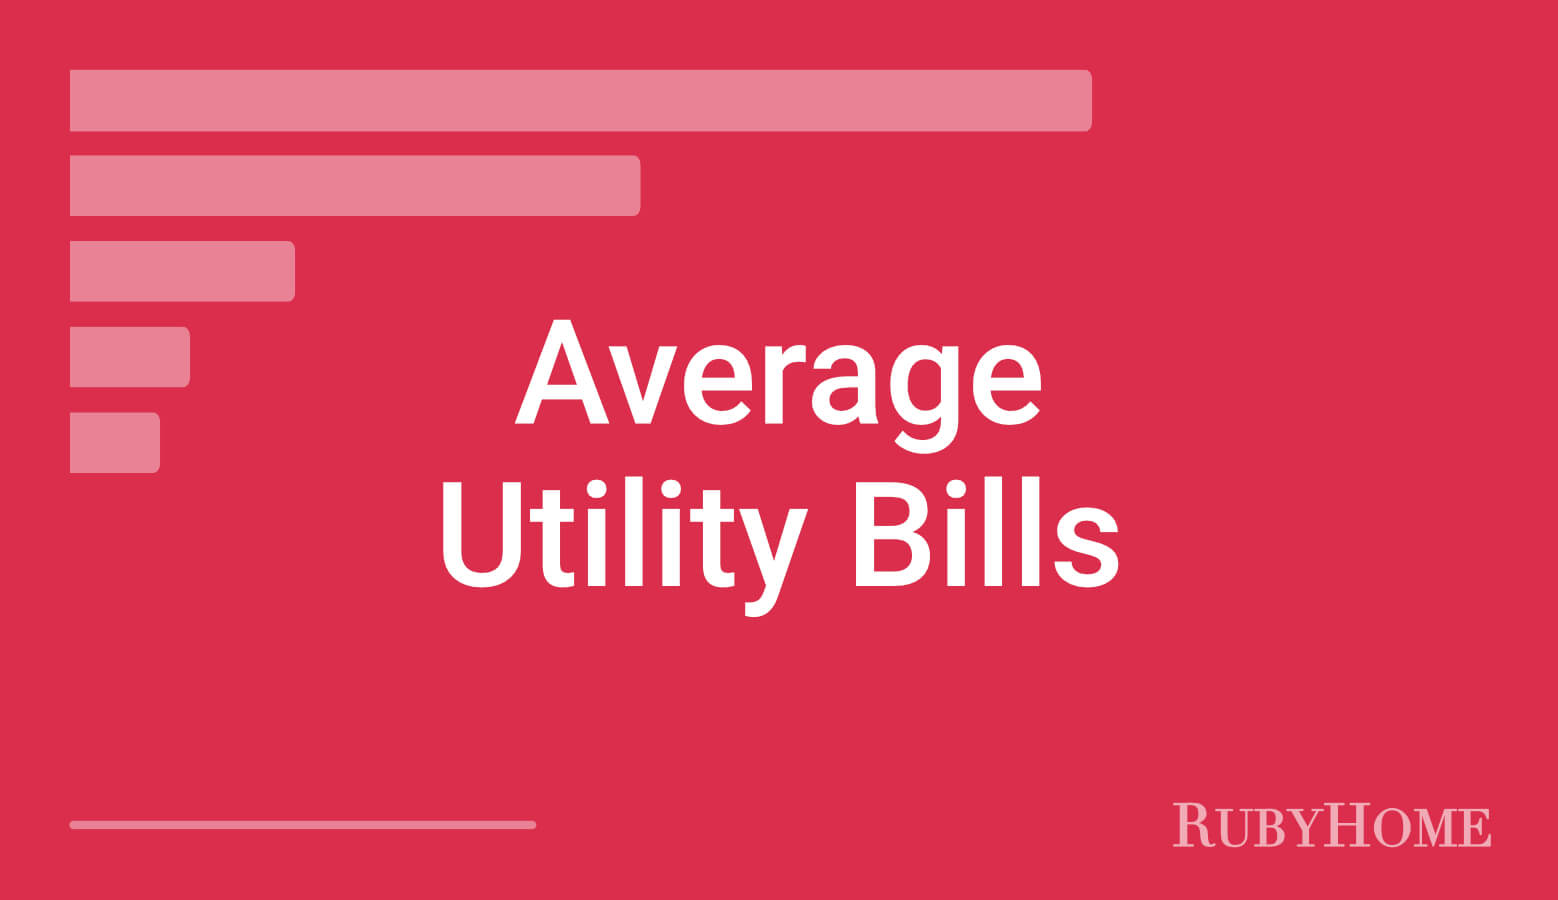 Average Utility Bills in United States